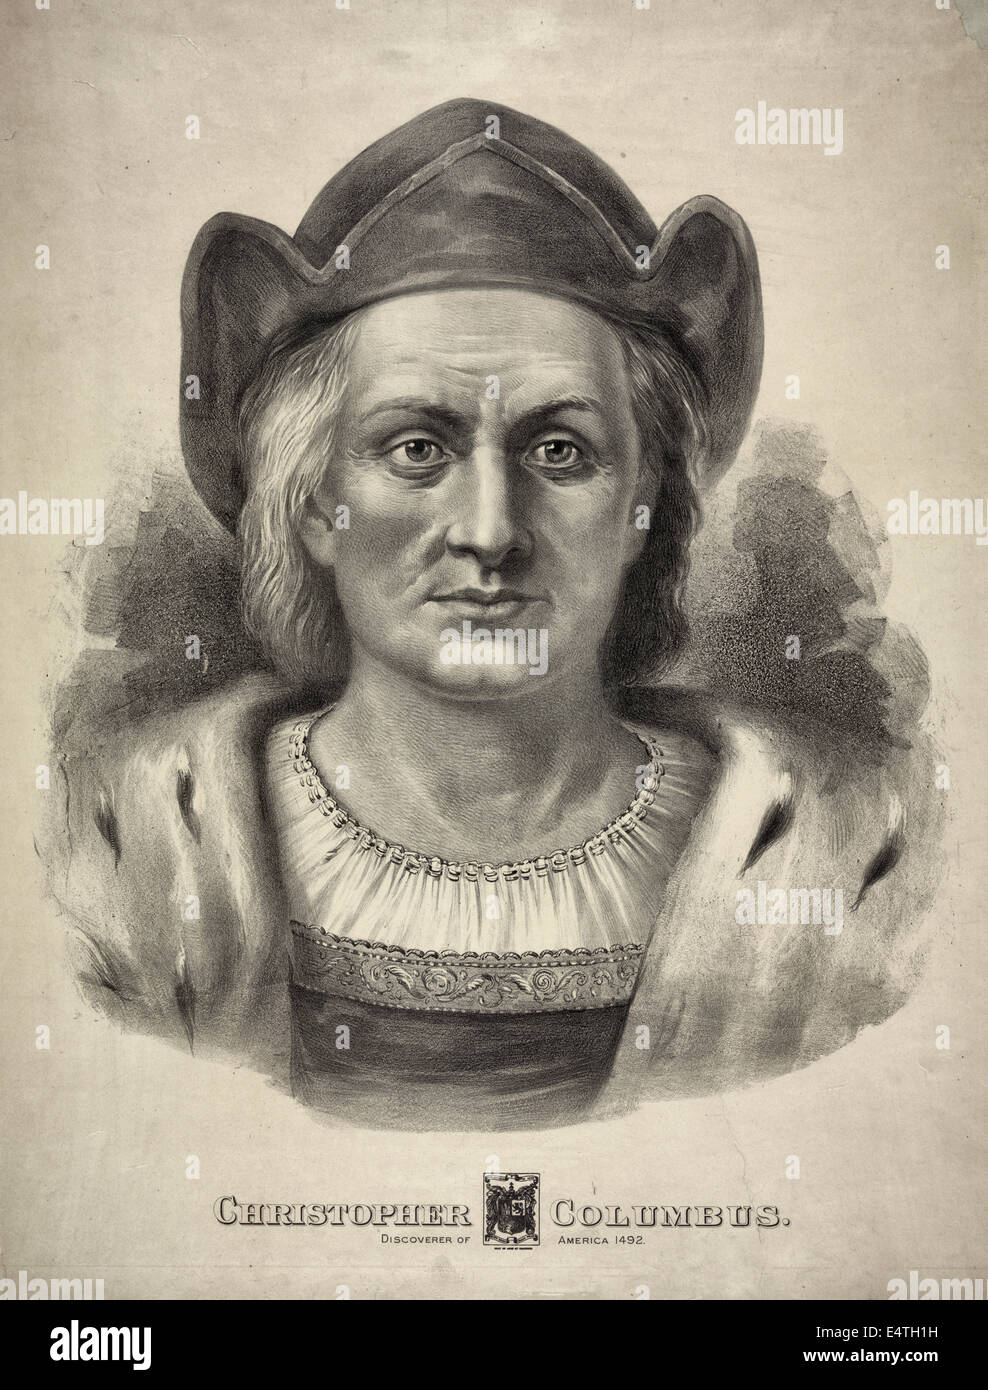 Christopher Columbus: Discoverer of America 1492 Stock Photo